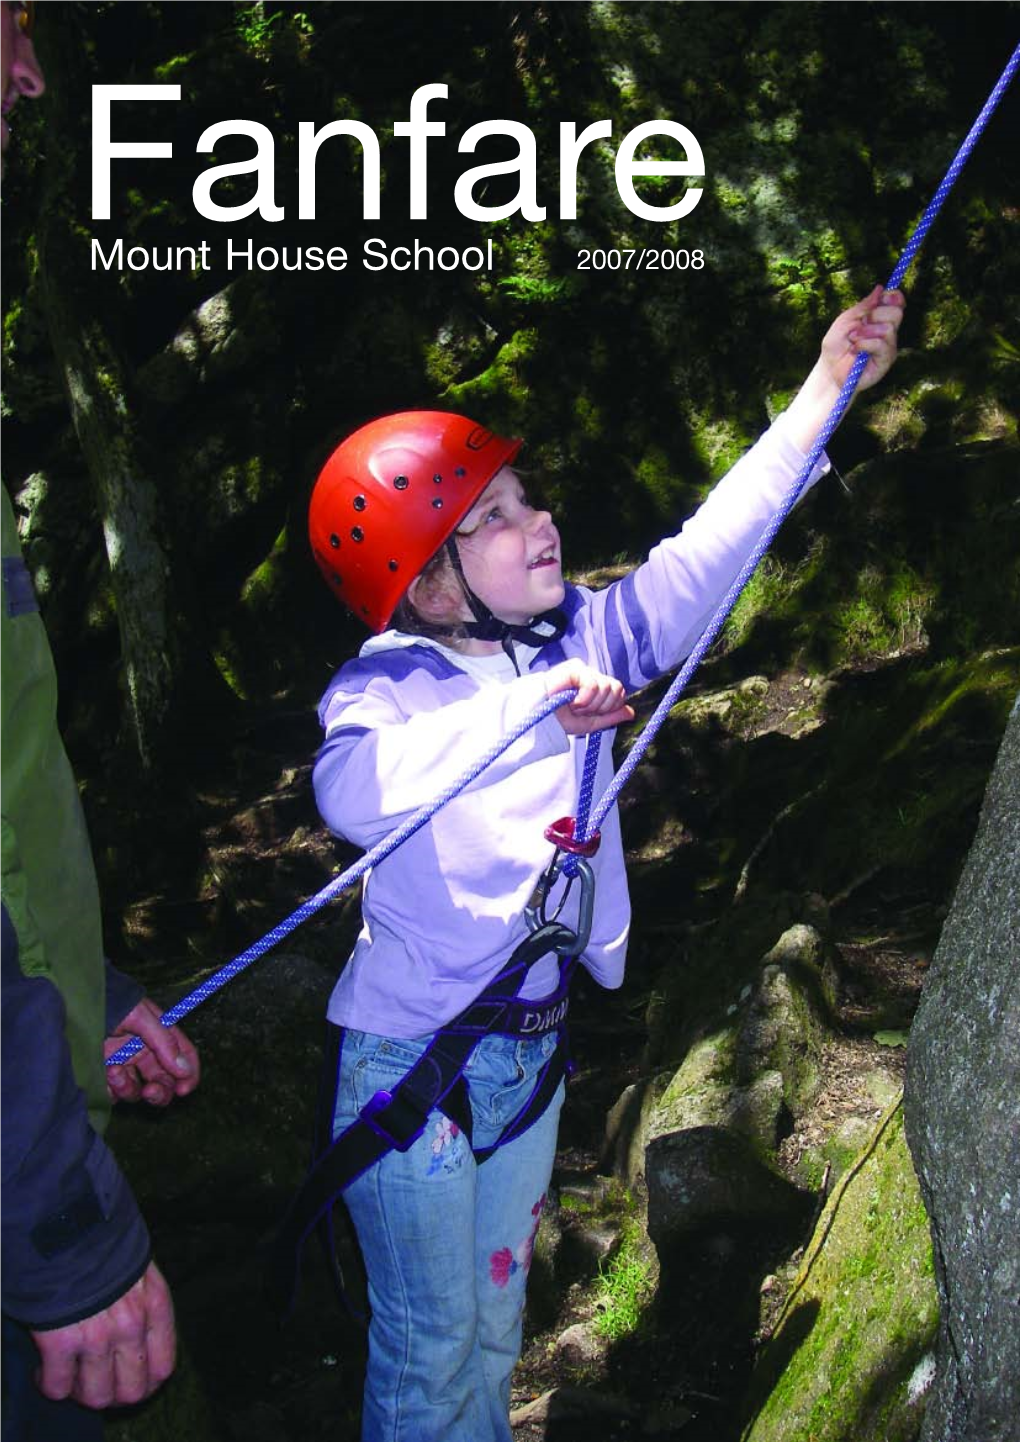 Mount House School 2007/2008 Mount House School, Tavistock 2007/2008 Fanfare STUD